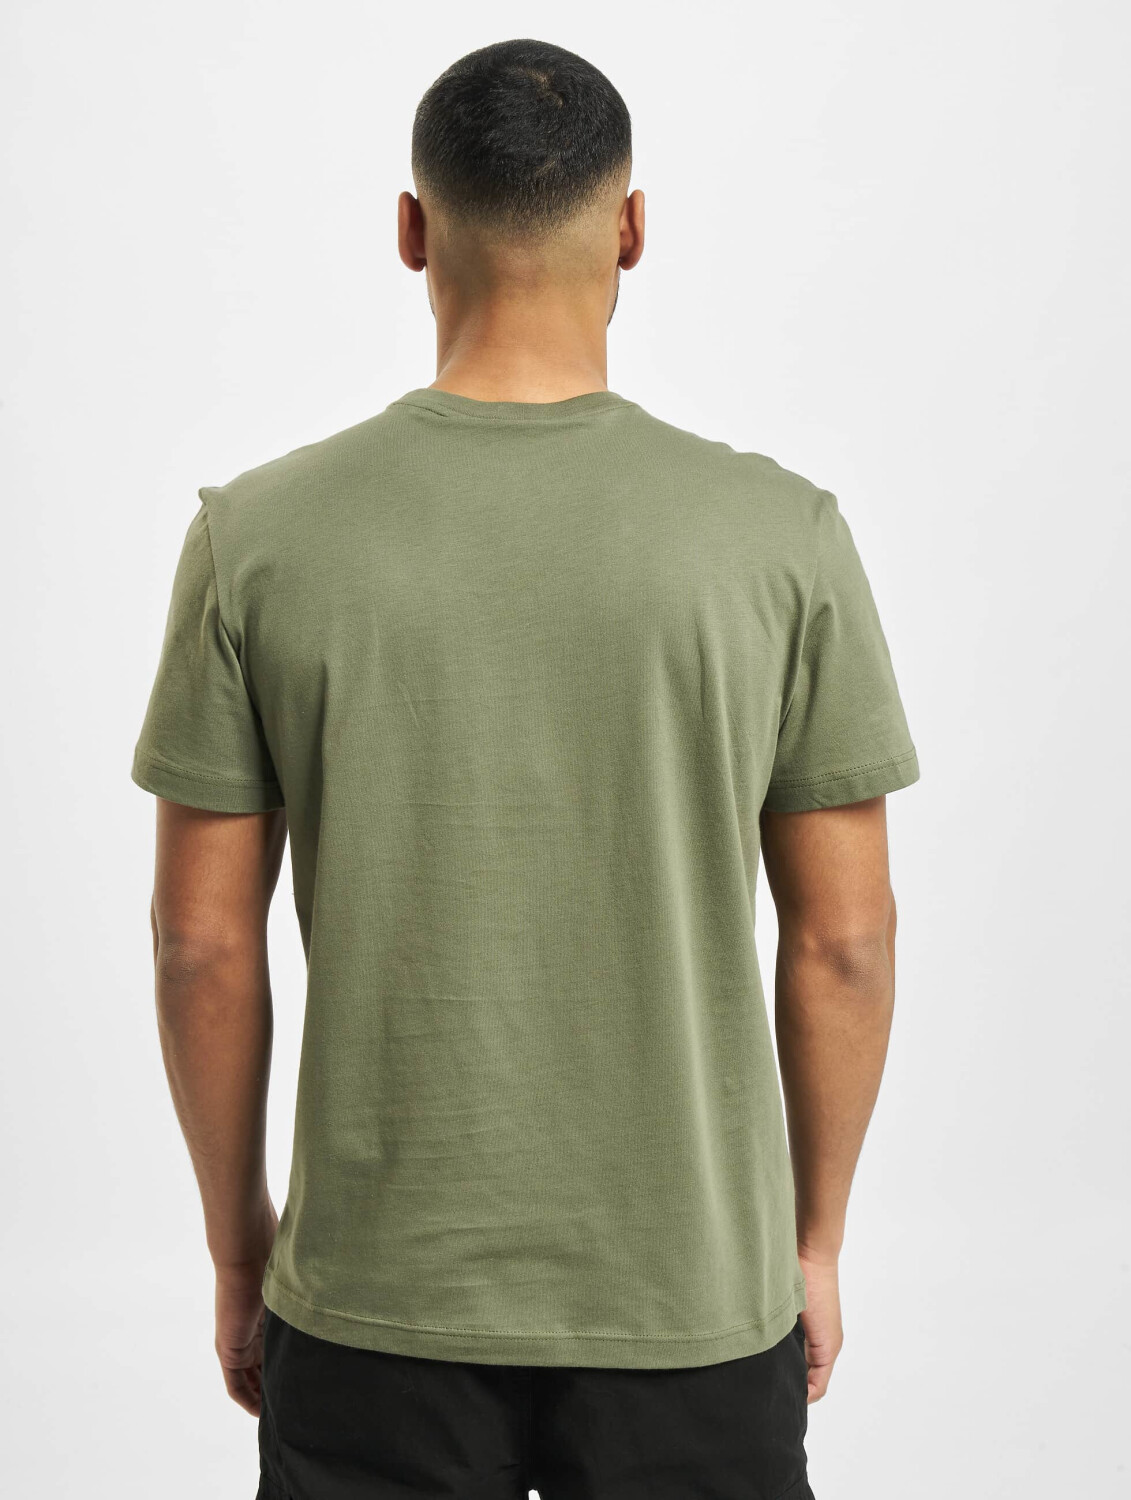 Lacoste Men\'s Crew Neck Jersey T-Shirt (TH2038) tank olive ab 44,99 € |  Preisvergleich bei